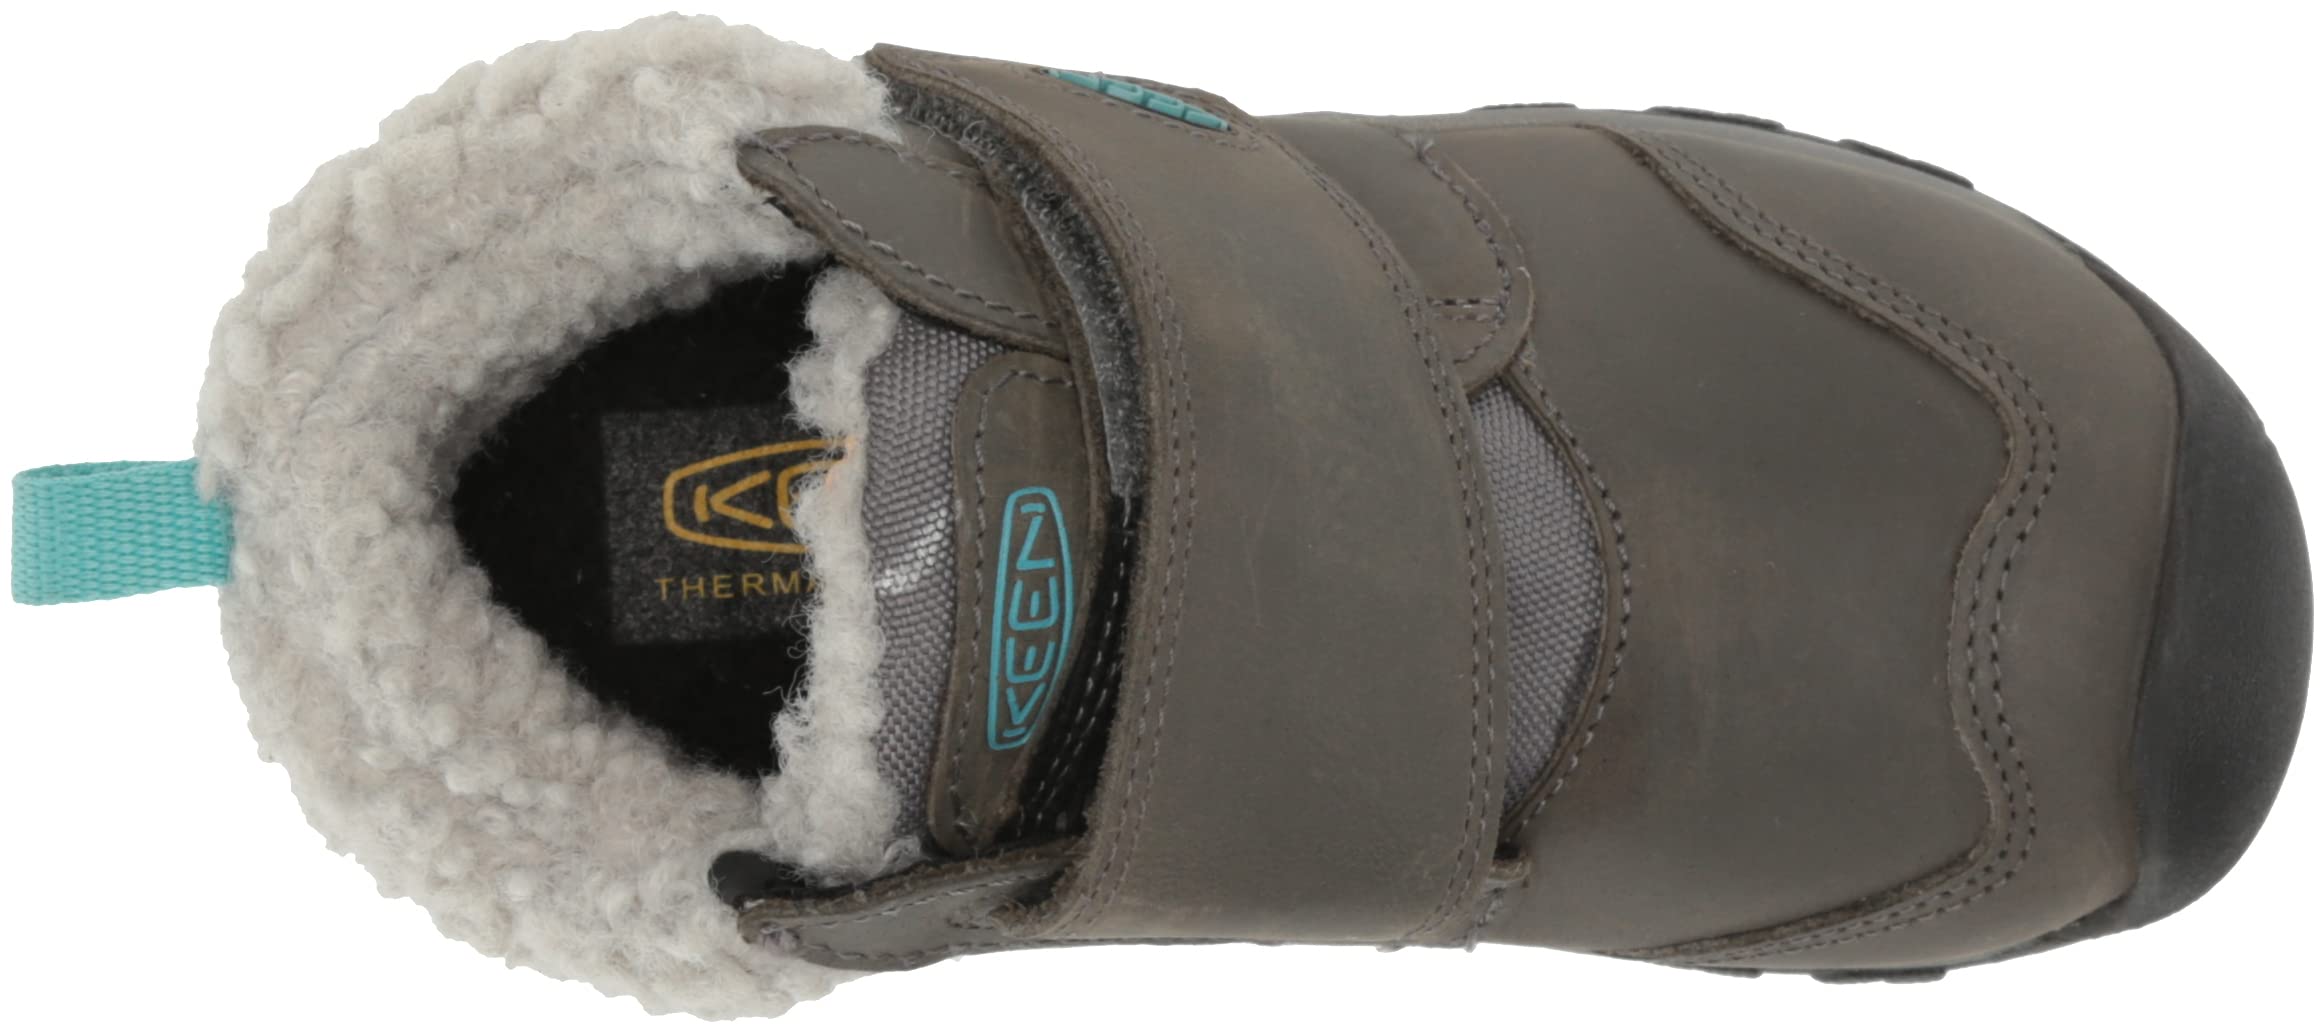 KEEN Unisex-Child Kootenay 4 Mid Height Insulated Waterproof Snow Boots